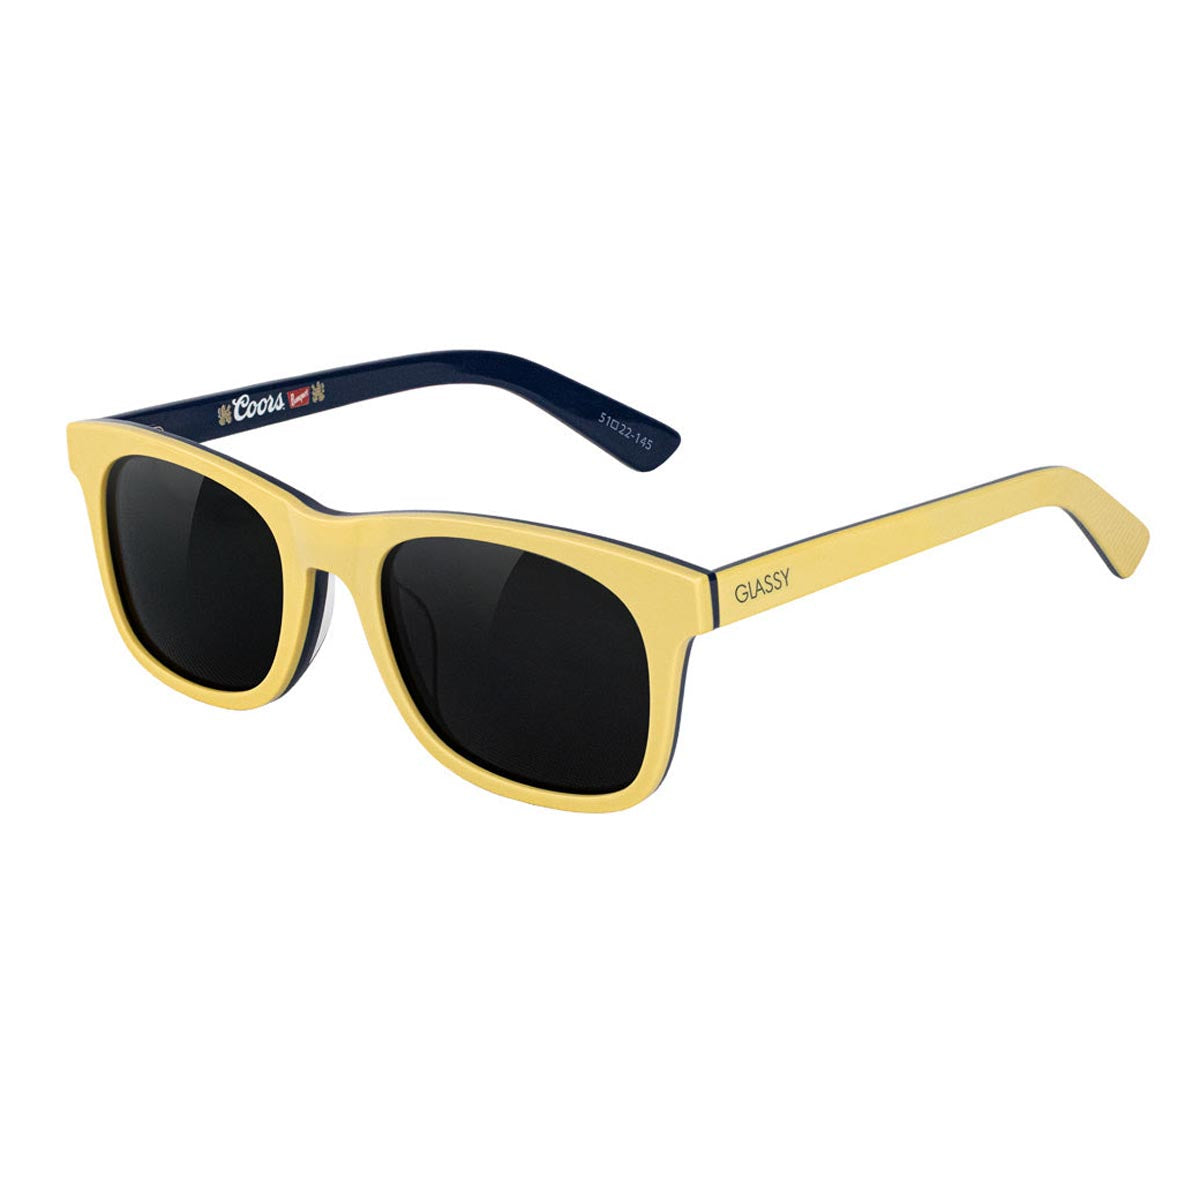 Glassy x Coors Banquet Hampshire Sunglasses - Buff image 2